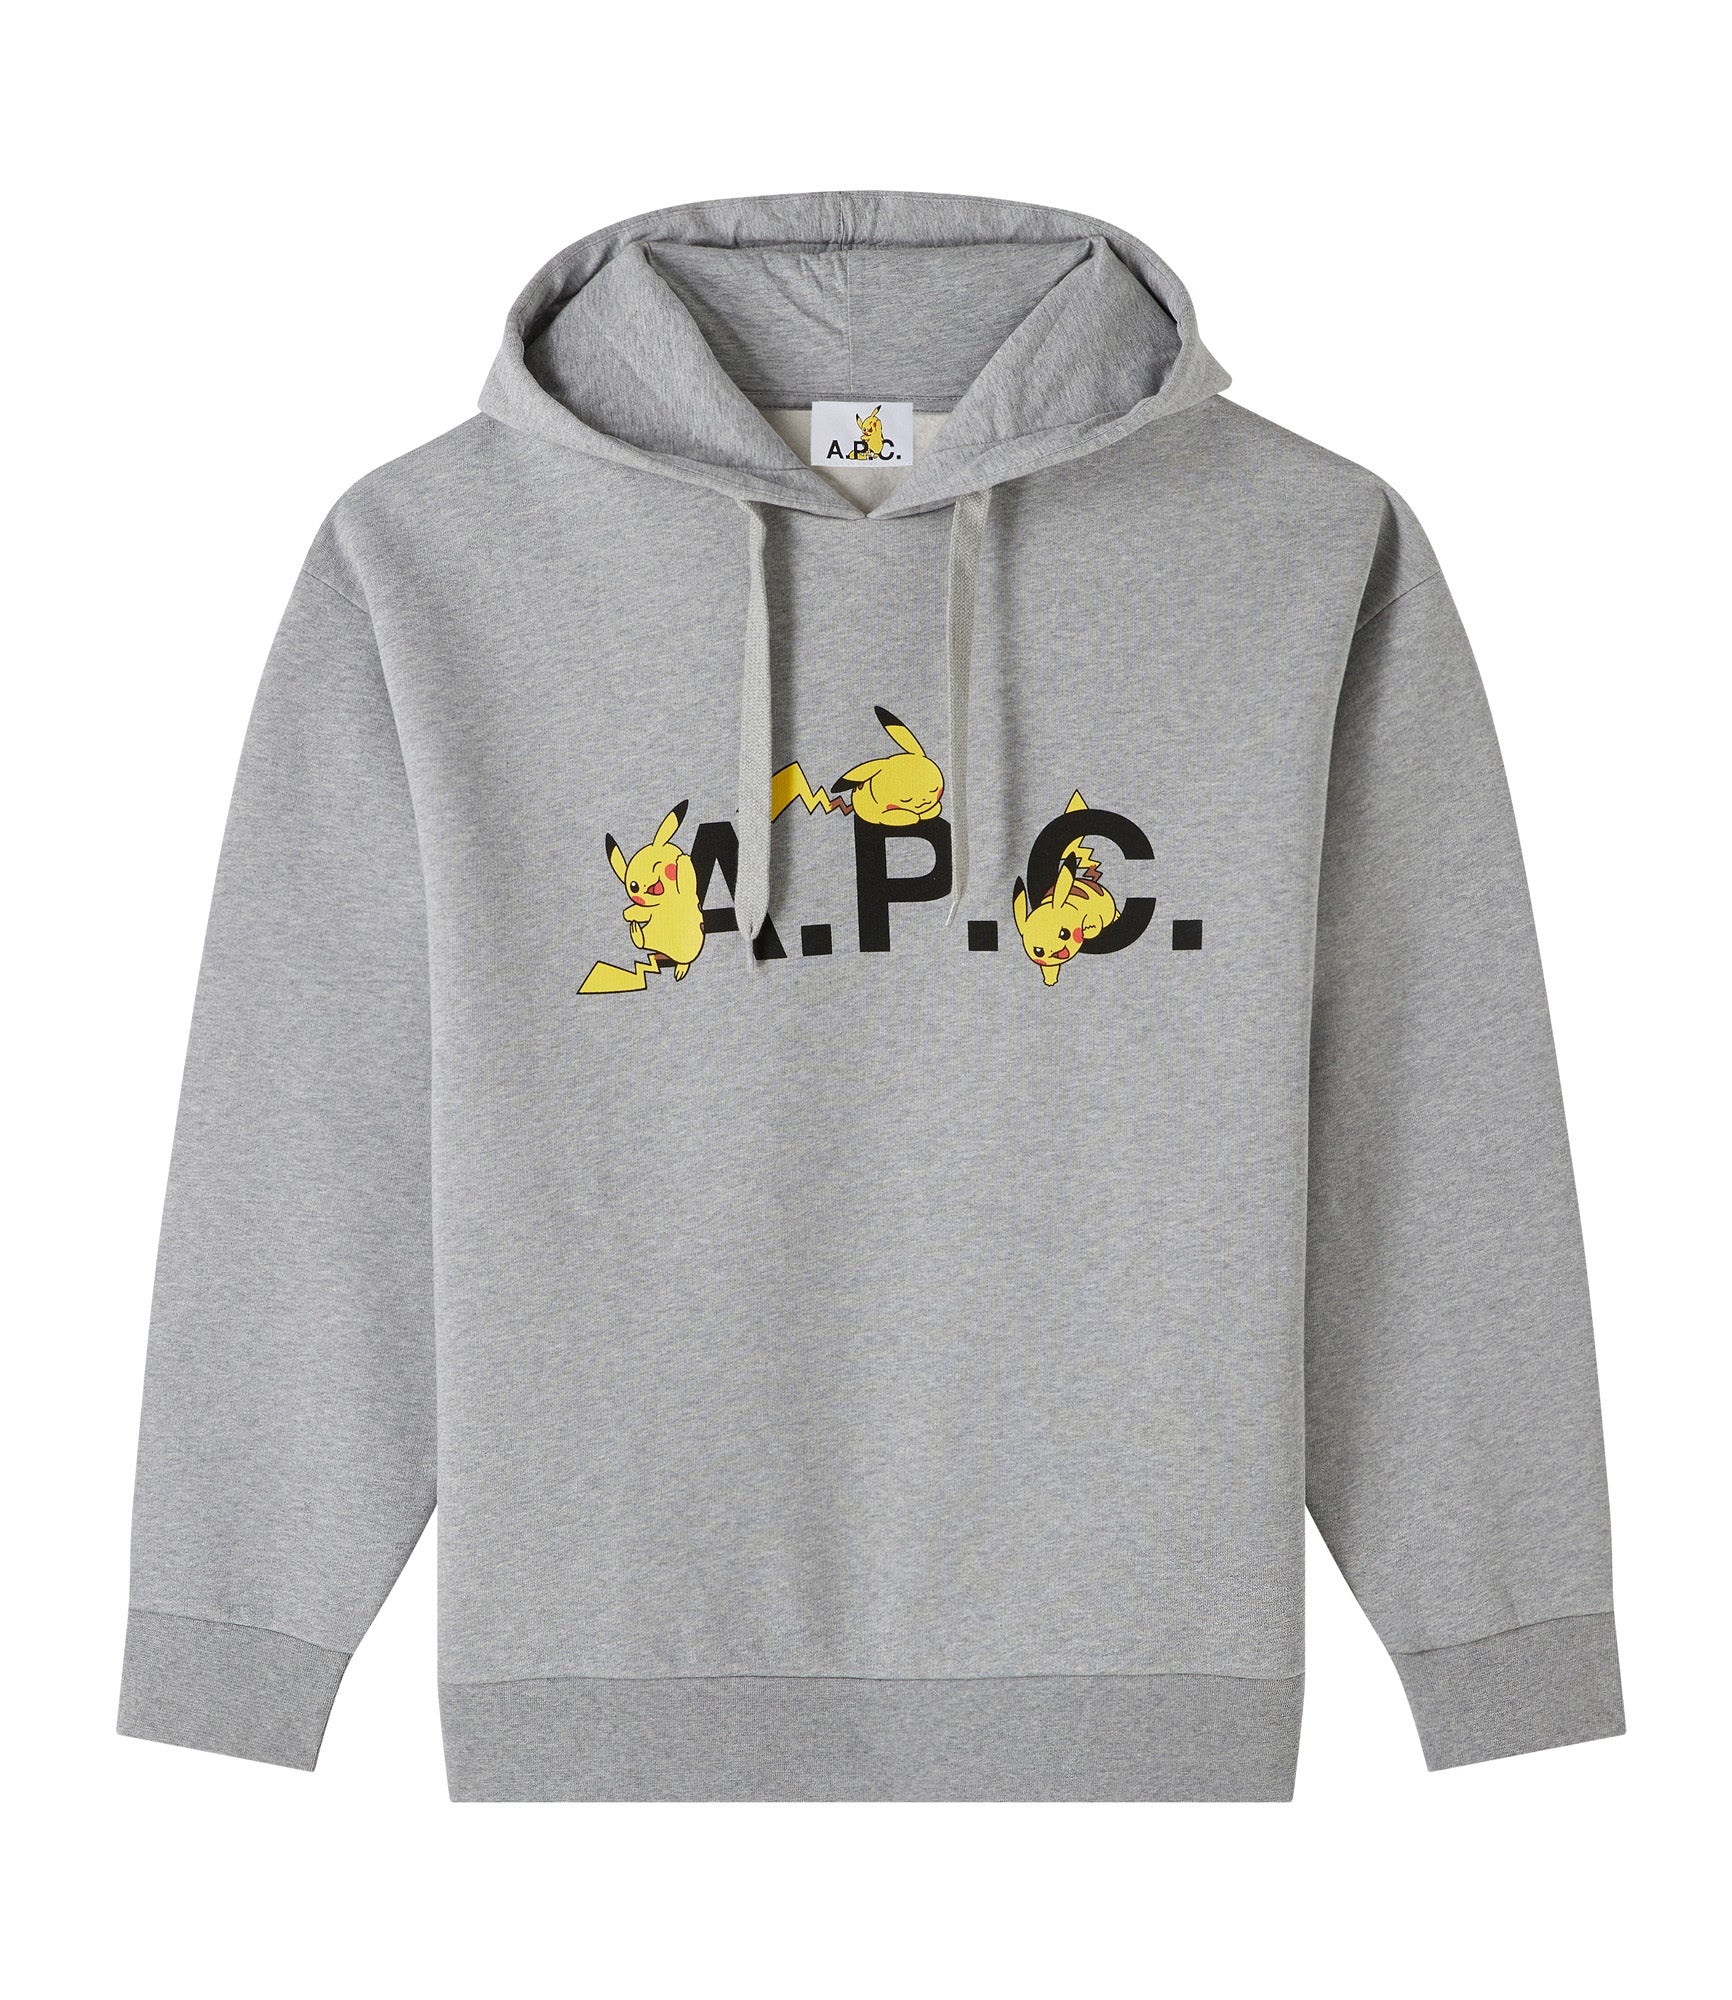 Pokémon Pikachu hoodie - 1